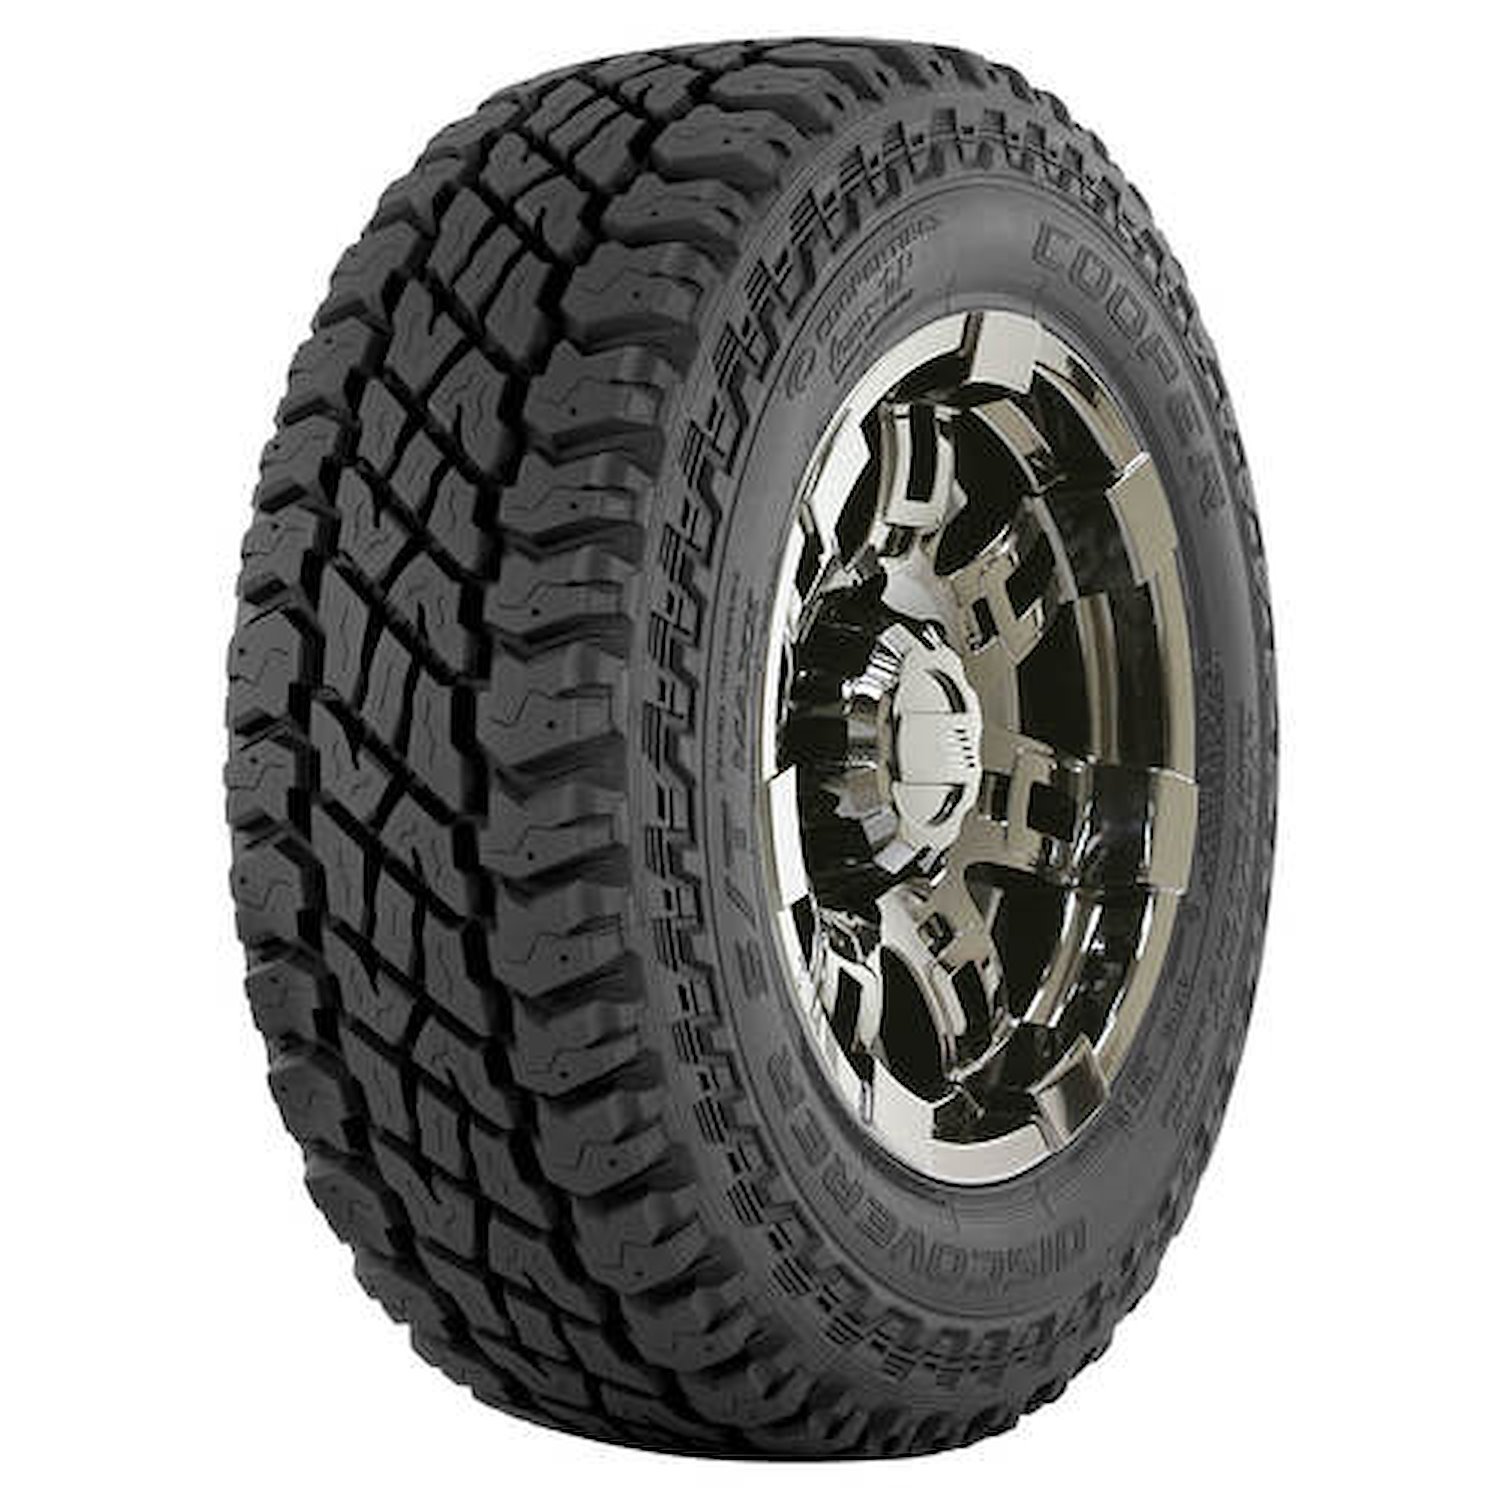 Discoverer S/T Maxx All-Terrain Tire, LT235/85R16